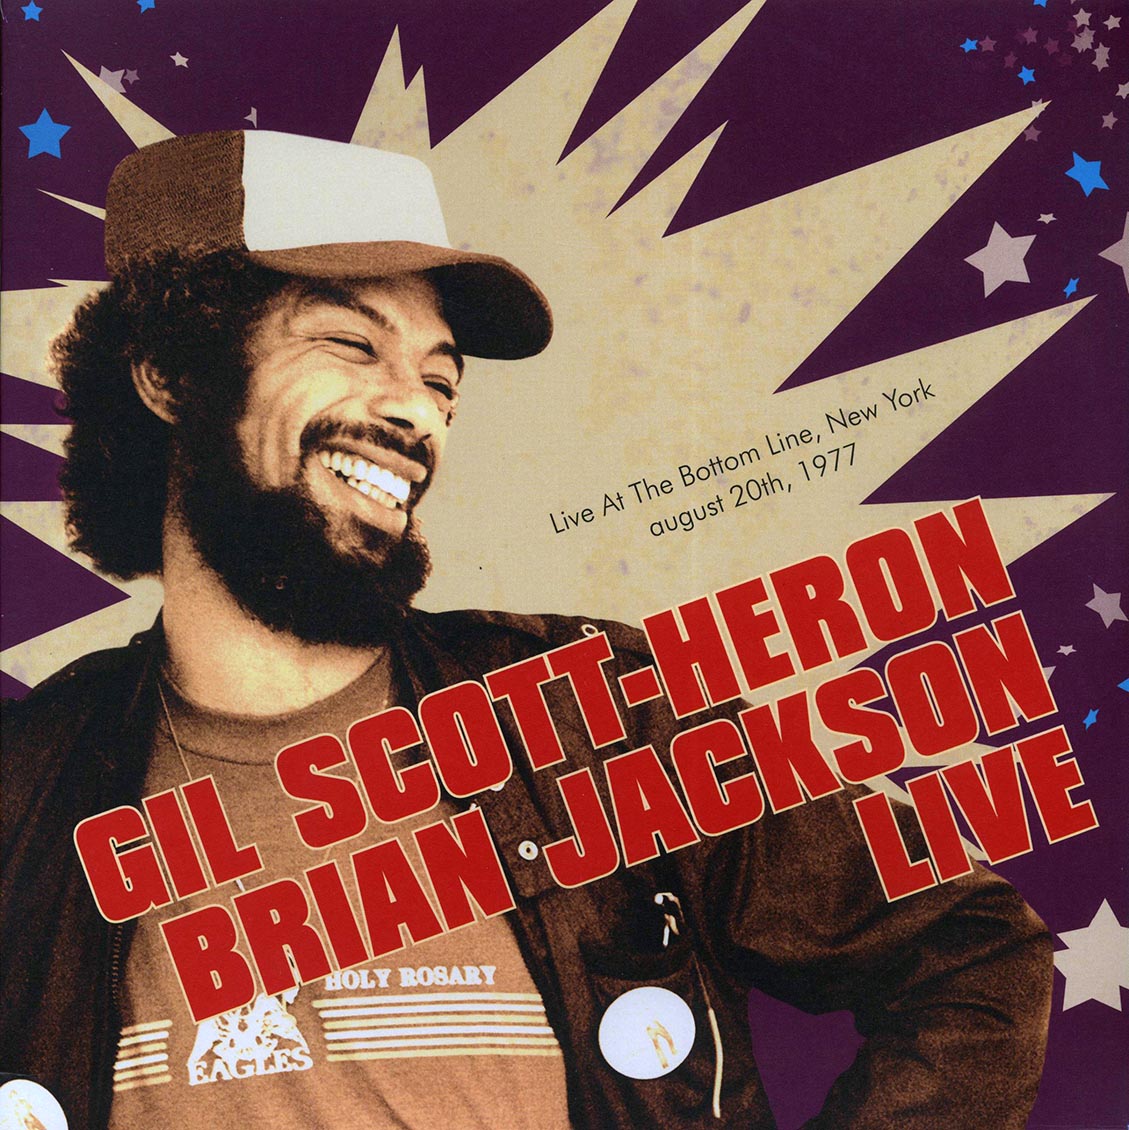 Gil Scott-Heron, Brian Jackson - Live At The Bottom Line, New York, August 20th, 1977 (2xLP) - Vinyl LP